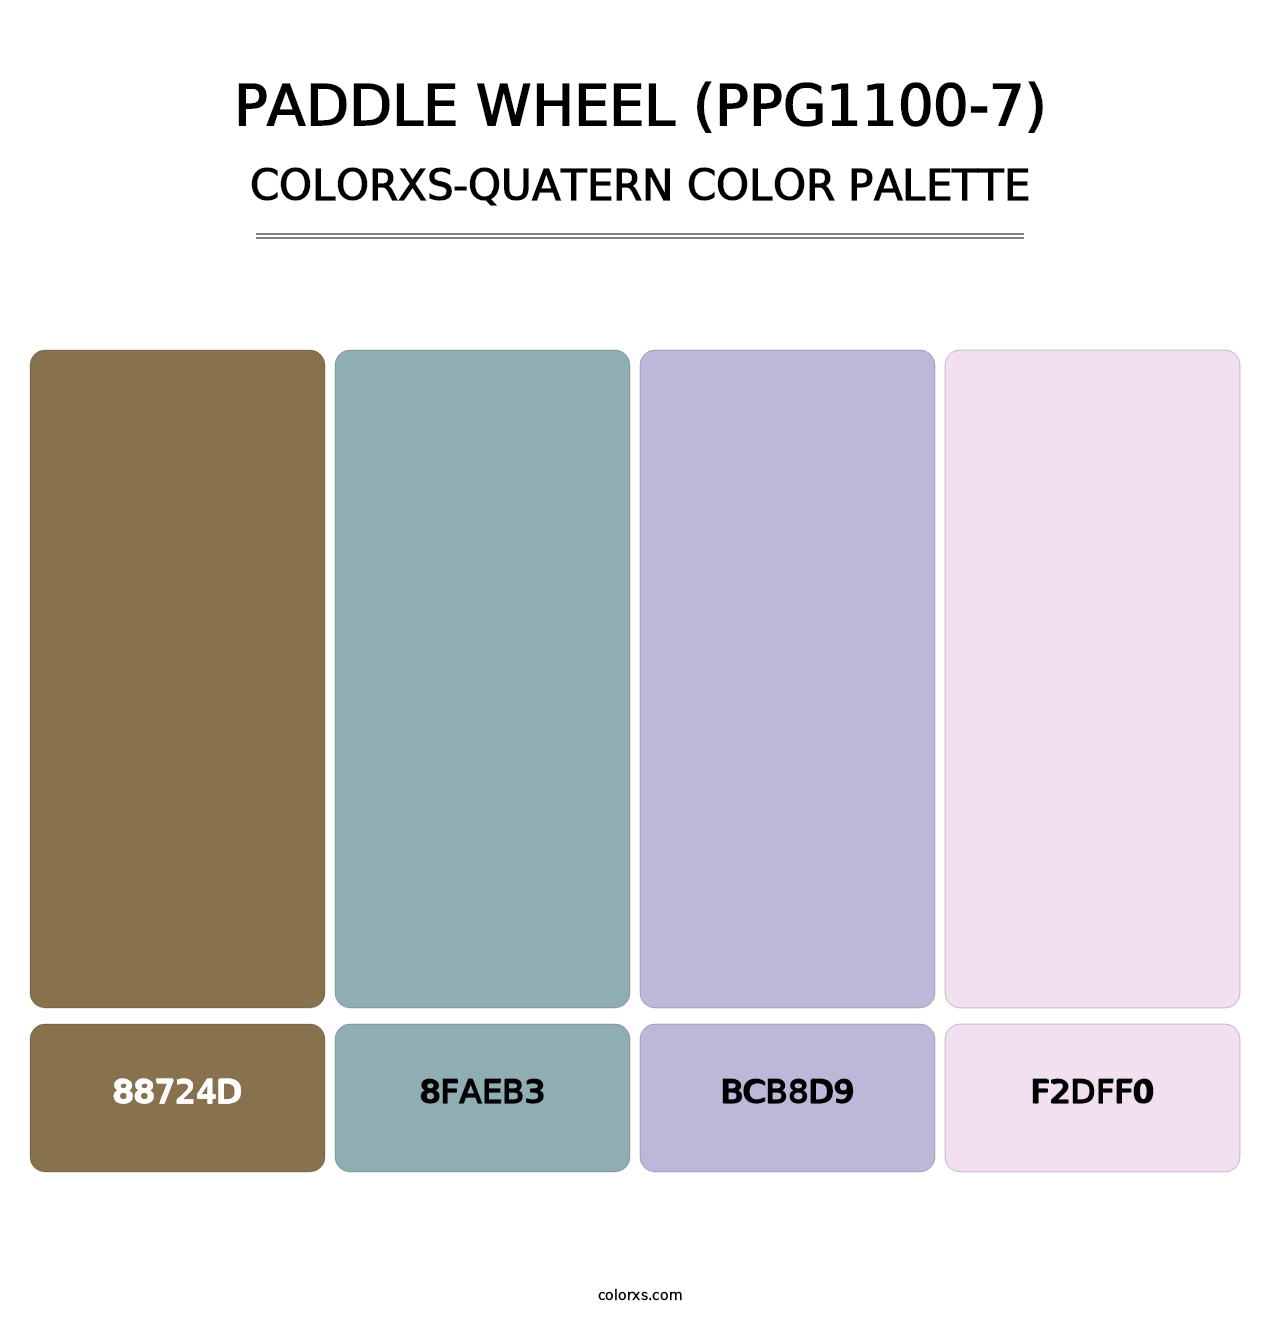 Paddle Wheel (PPG1100-7) - Colorxs Quatern Palette